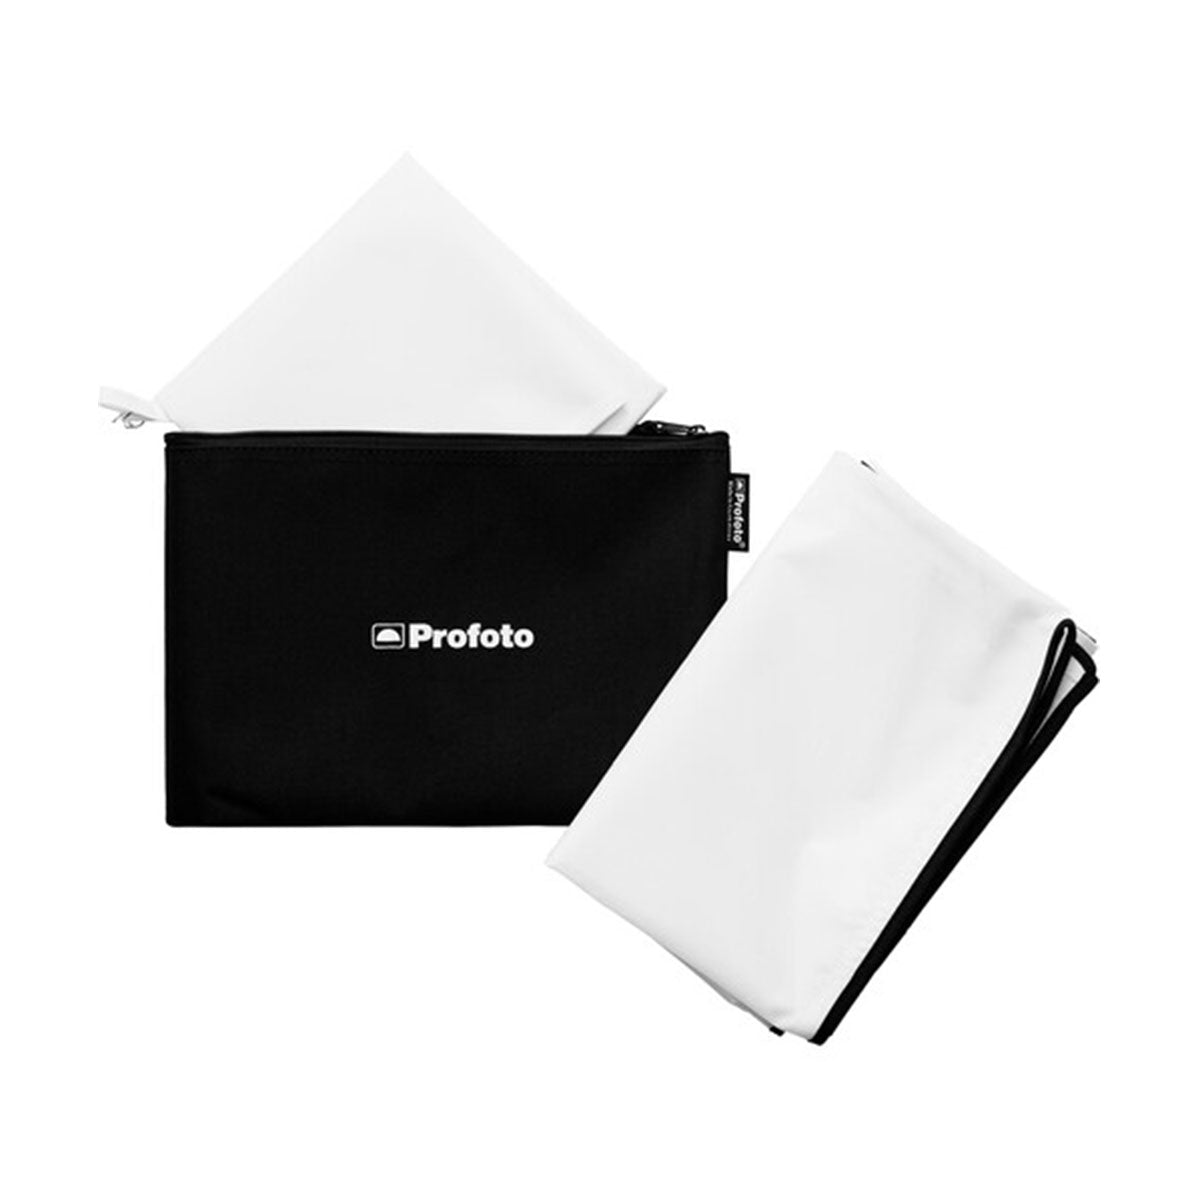 Profoto Rectangle Softbox 2x3’ Diffuser Kit 1 f-stop